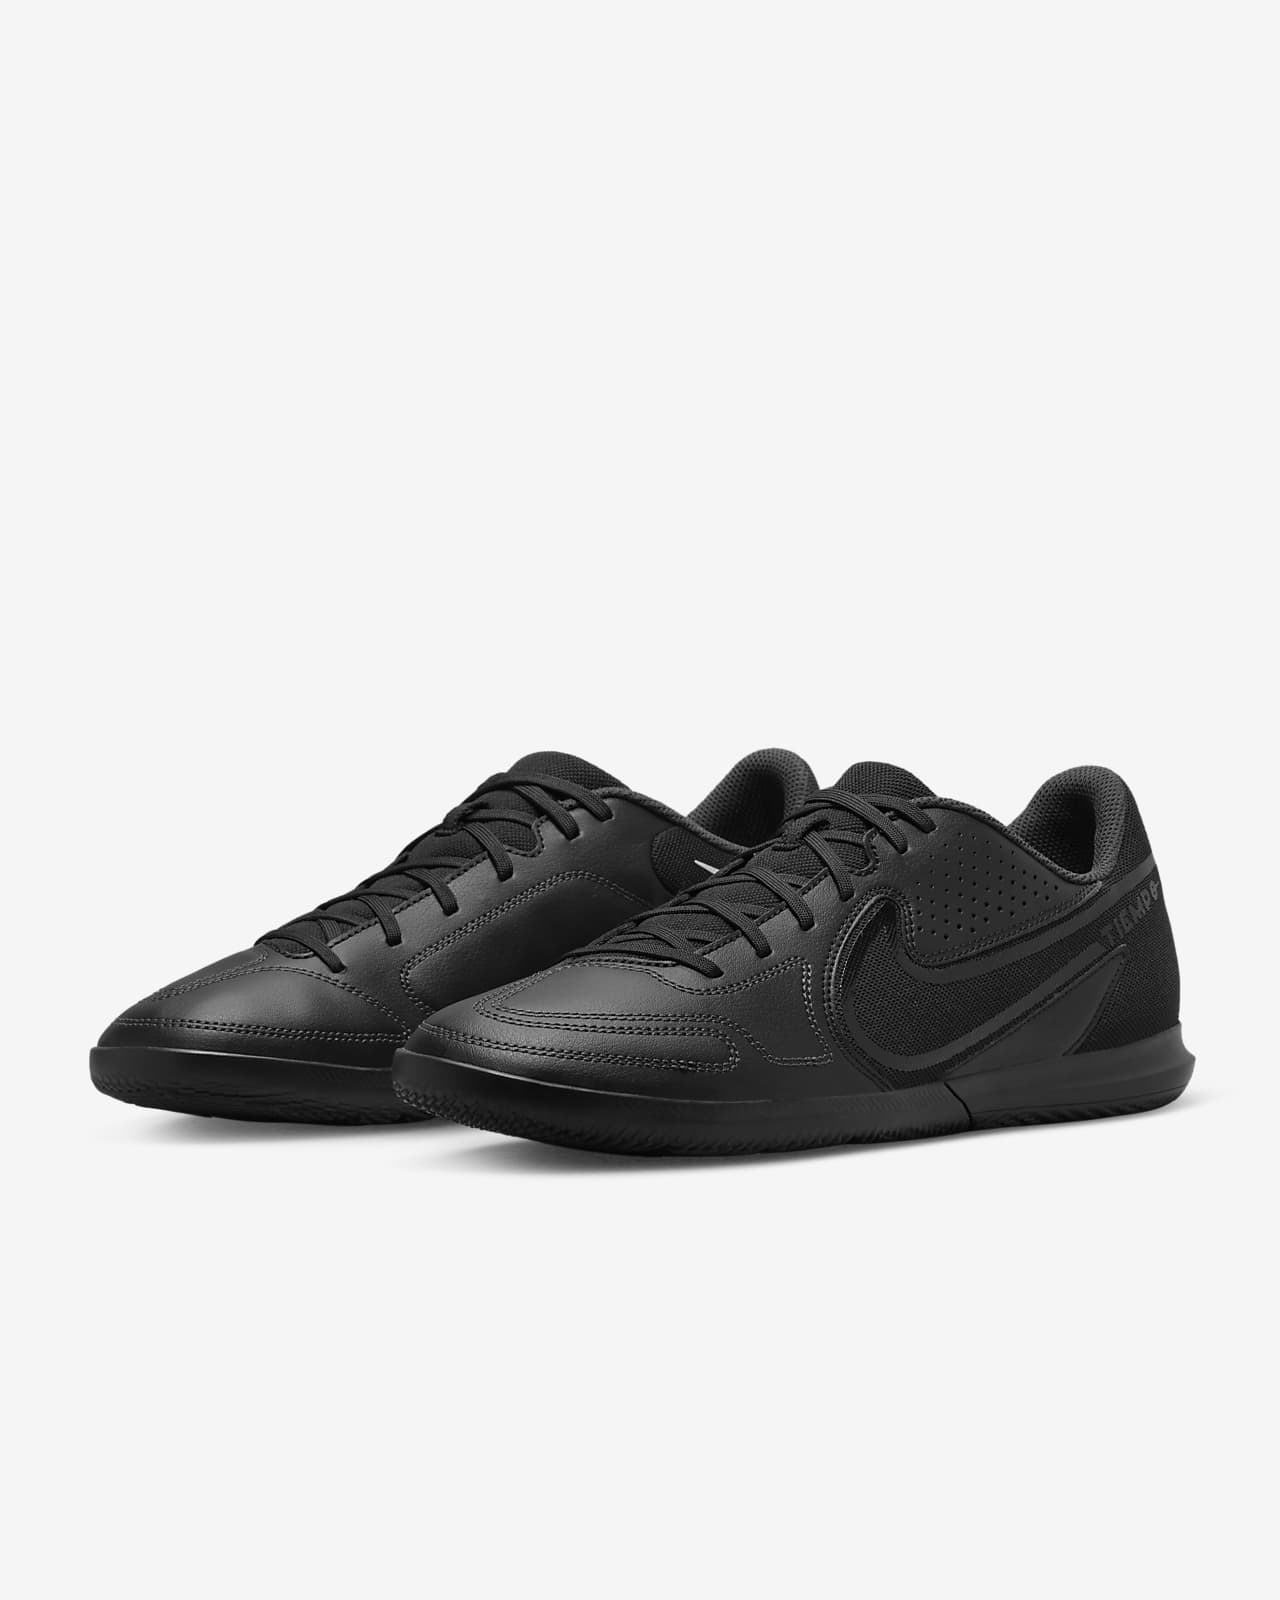 Nike Tiempo Legend 9 IC Indoor/Court Soccer Shoes.